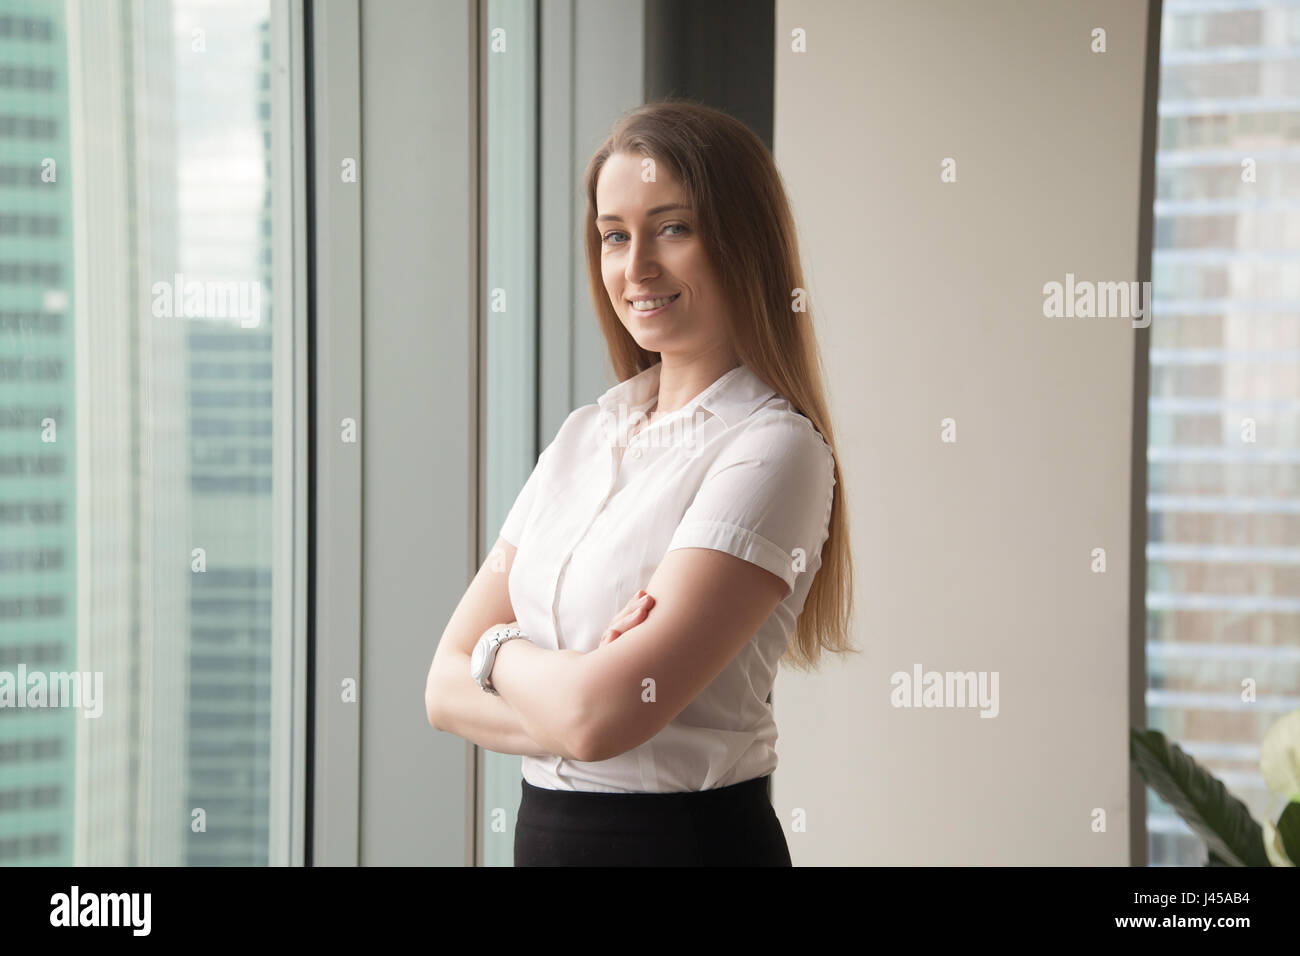 Confident young businesswoman enjoys success Stock Photo